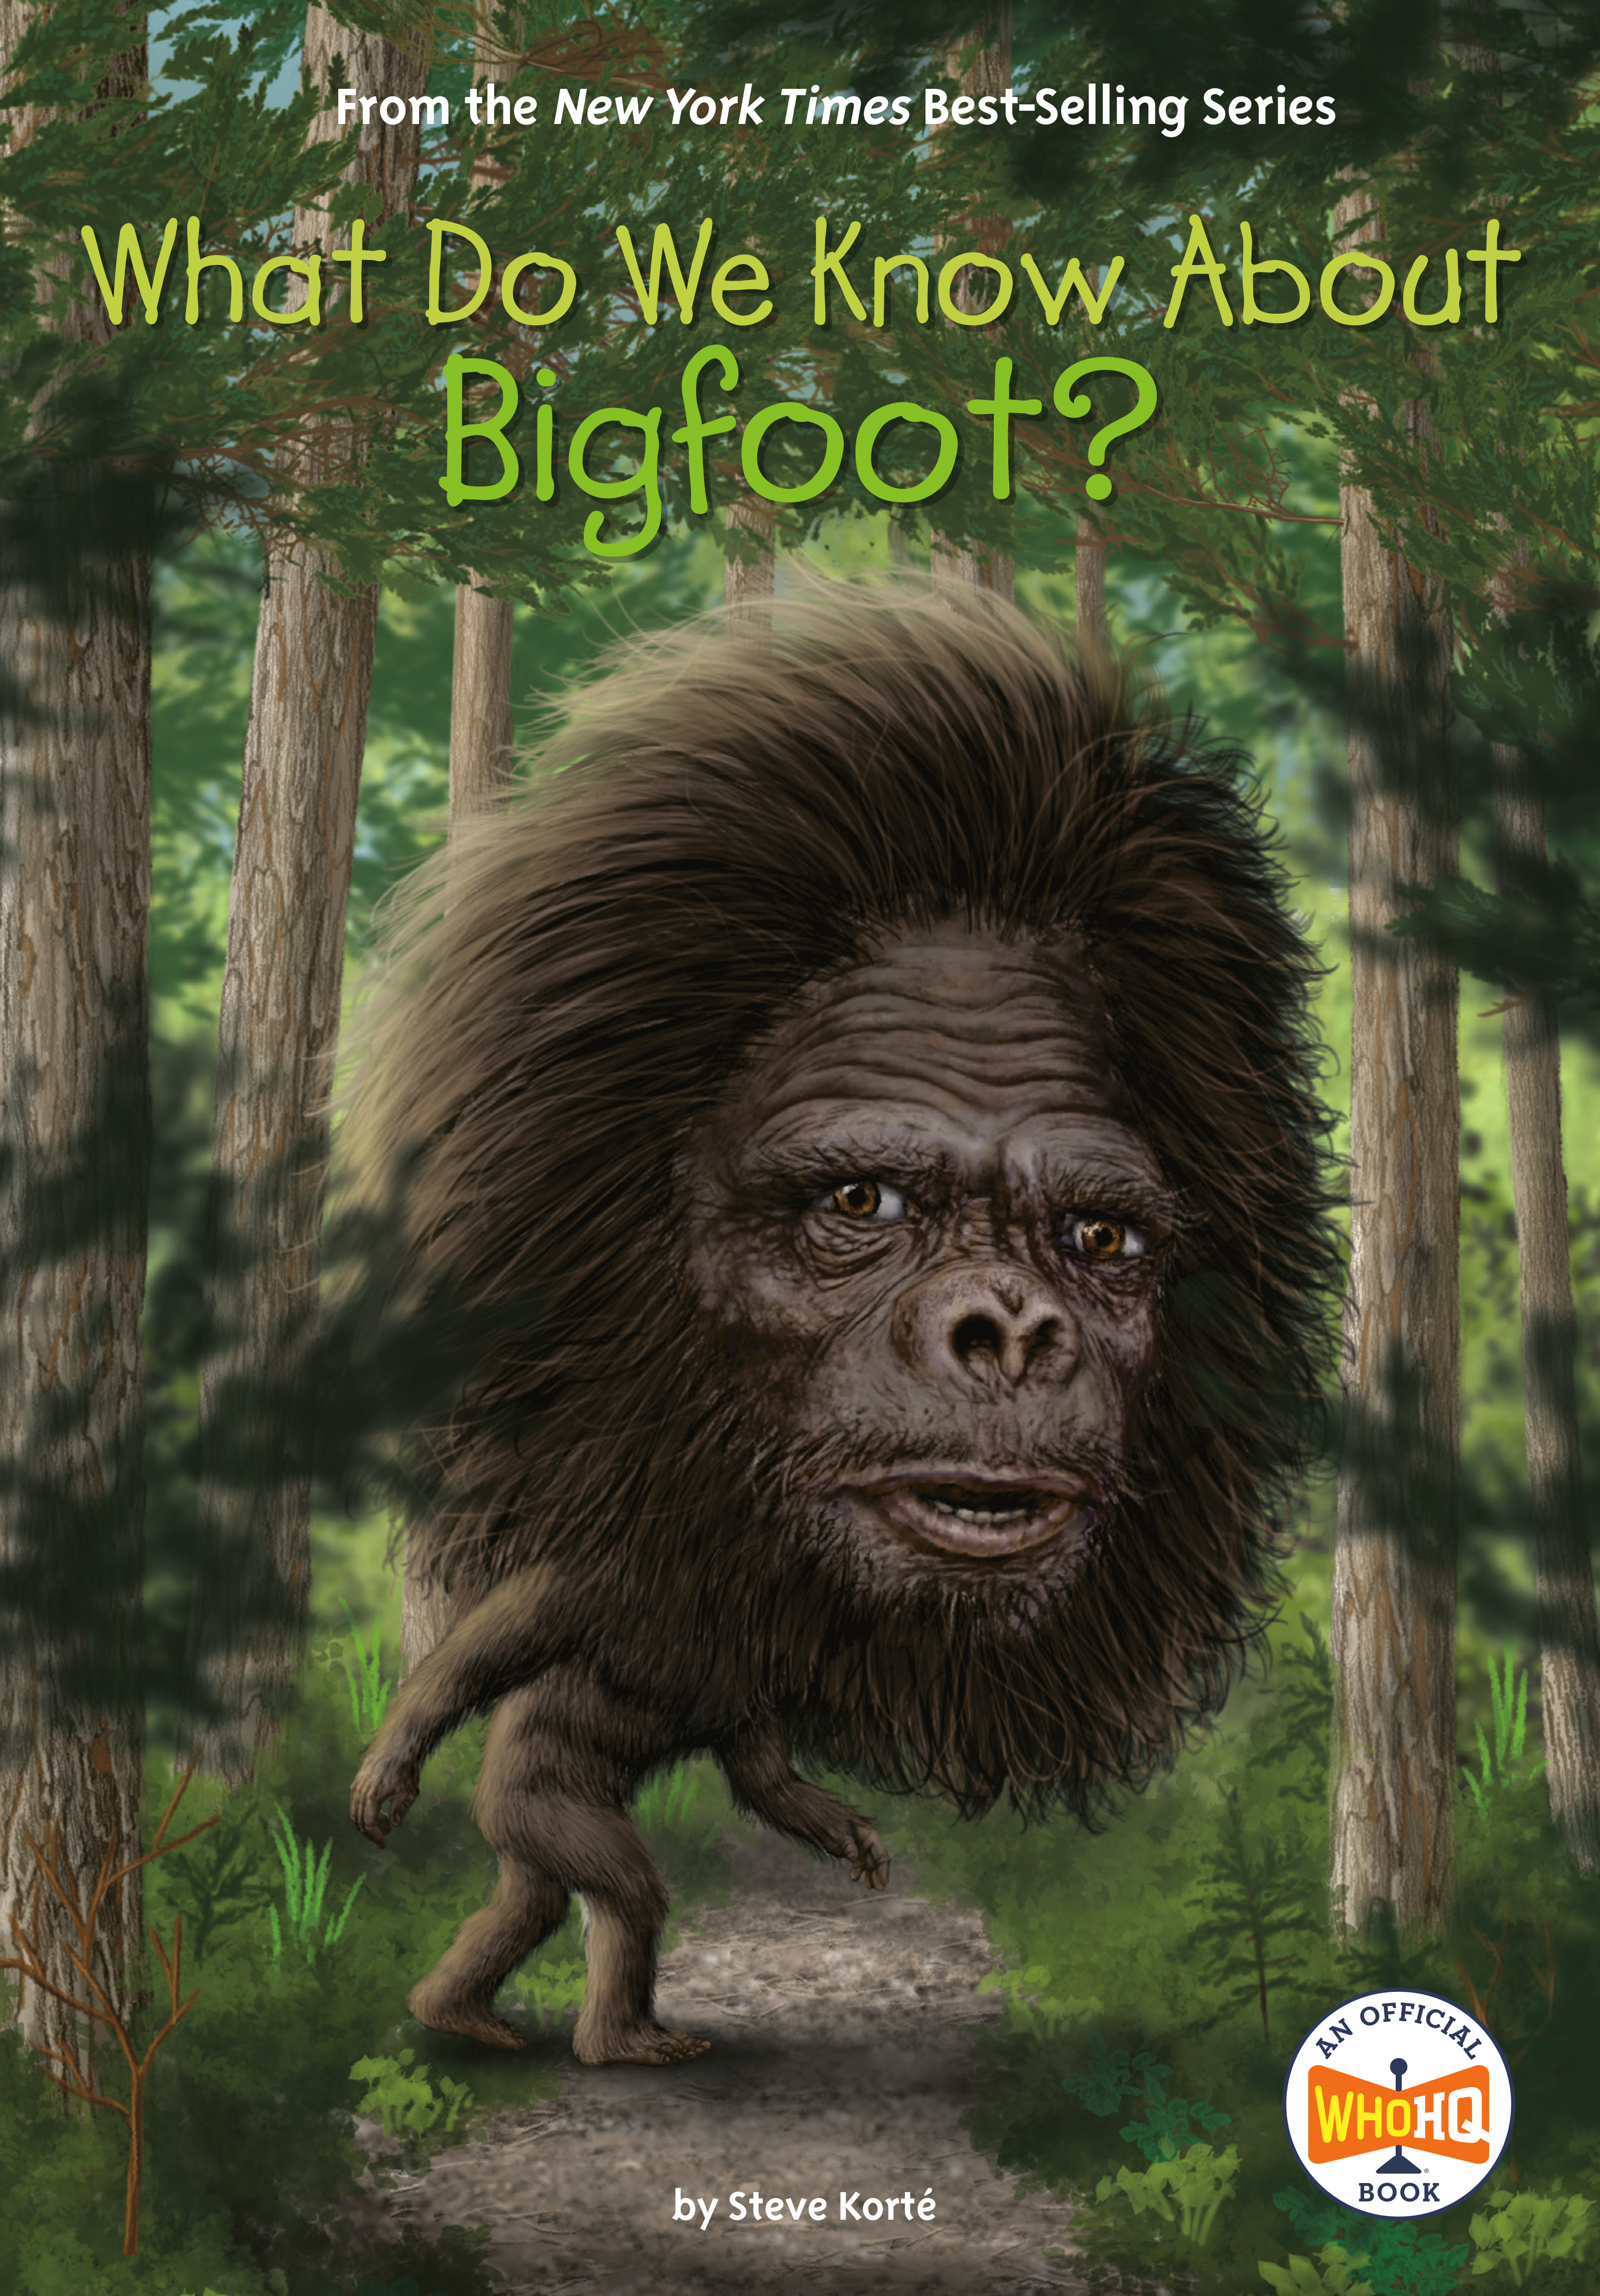 What Do We Know About? - What Do We Know About Bigfoot? | Documentary